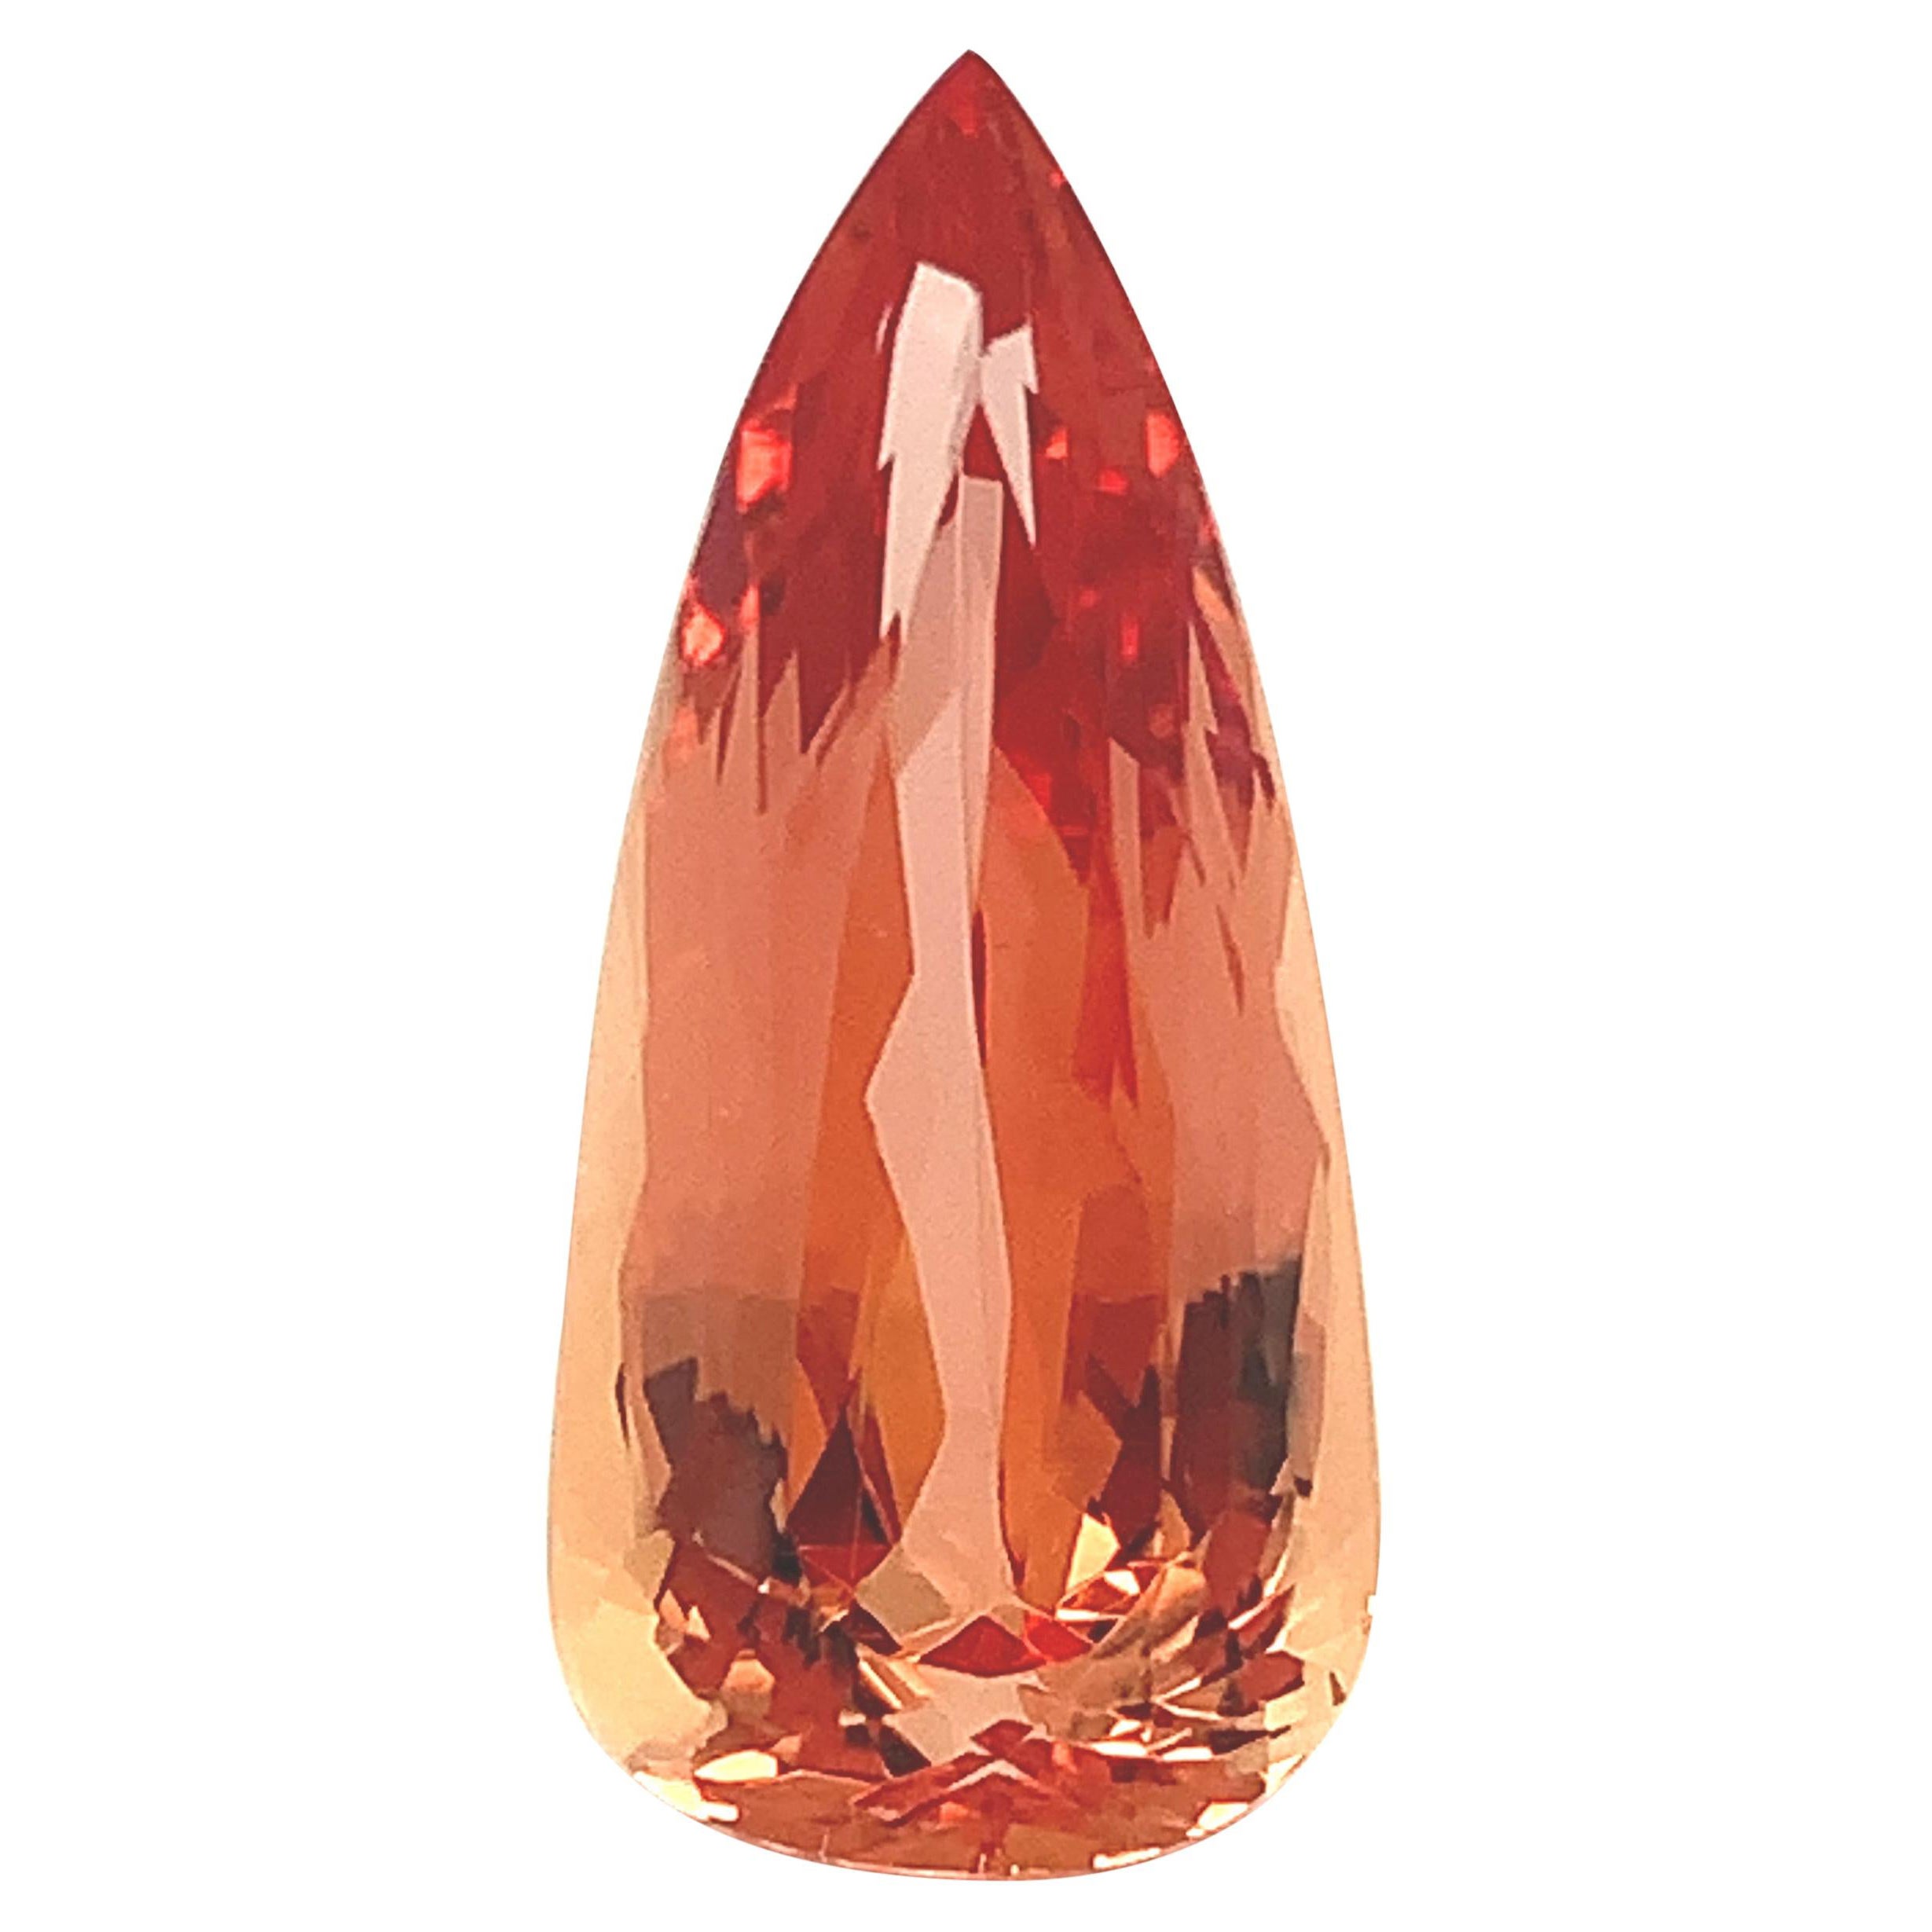 Topaze impériale orange 15,90 carats, pierre précieuse non sertie, certifiée GIA en vente